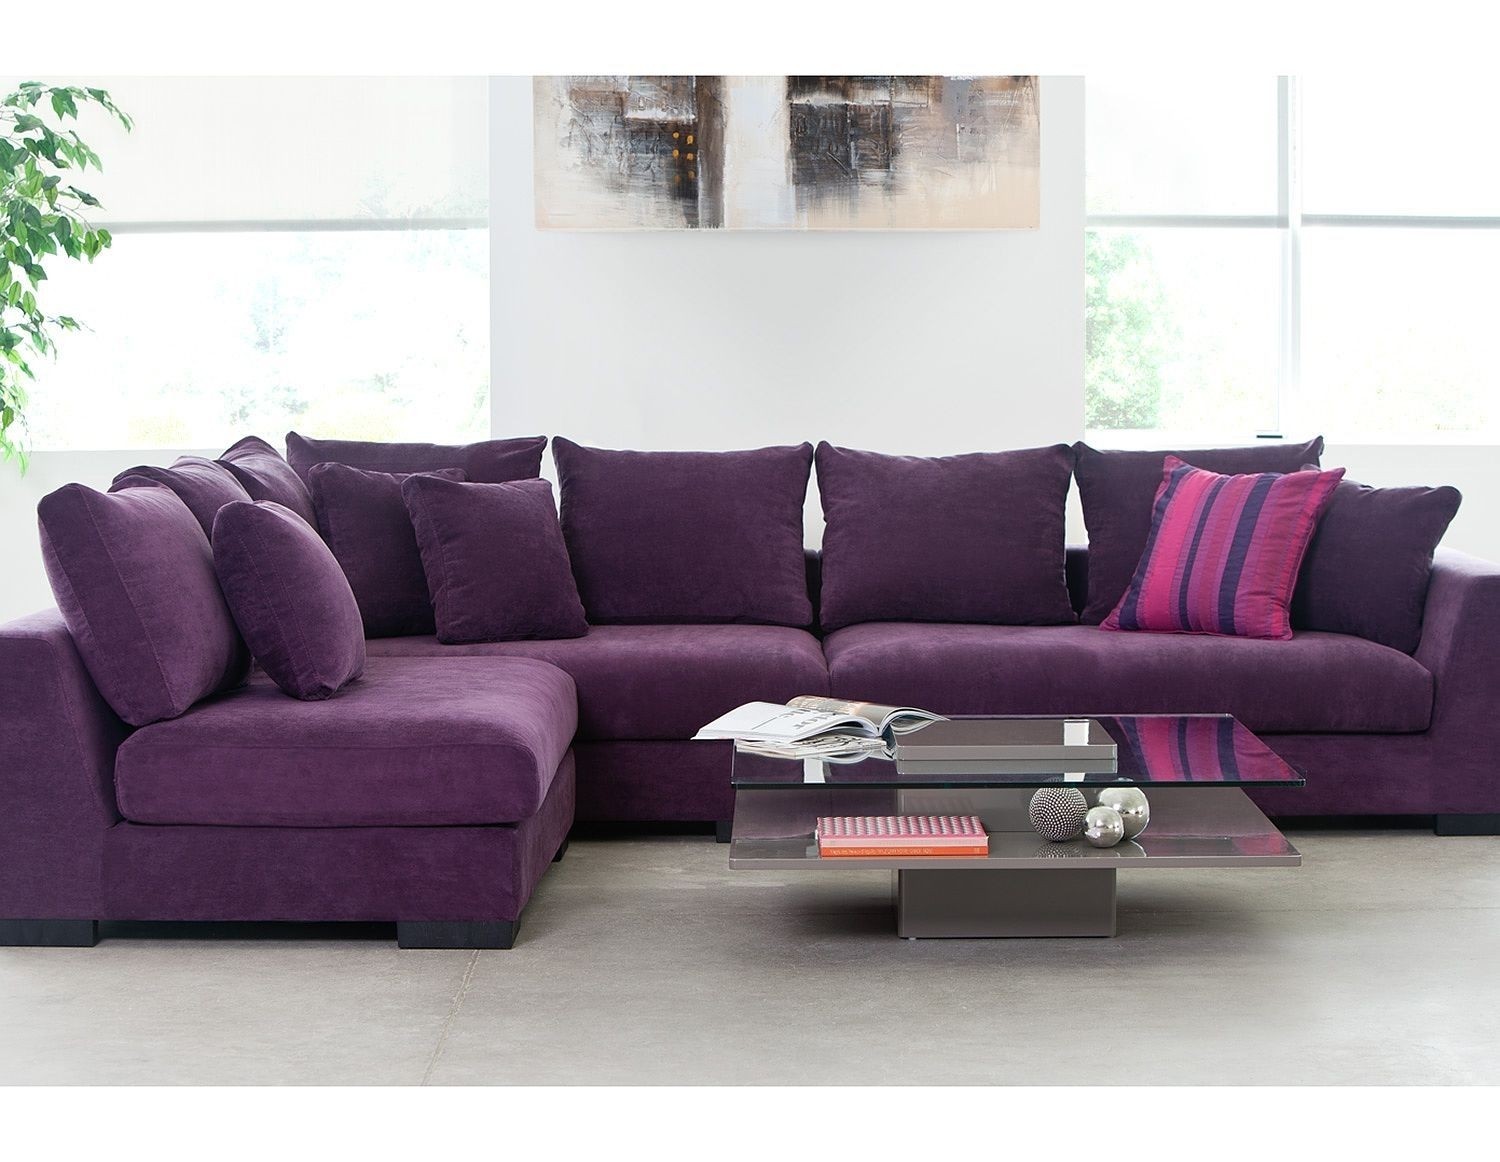 Deep purple sectional sofas purple living room purple